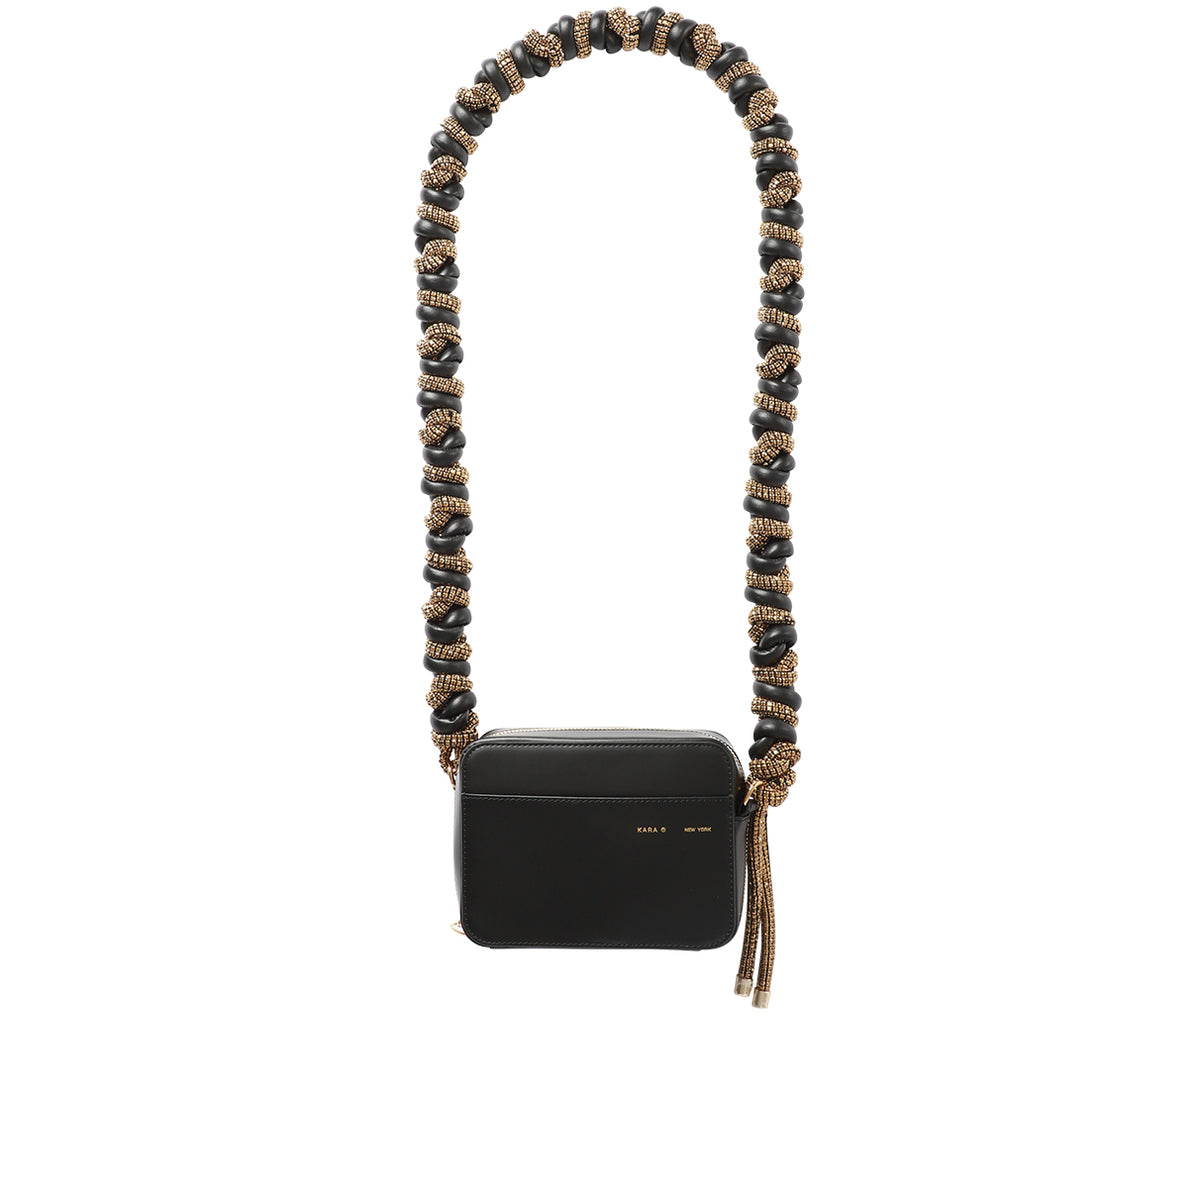 Kara Black Biker Chain Bag. • Comes with original... - Depop